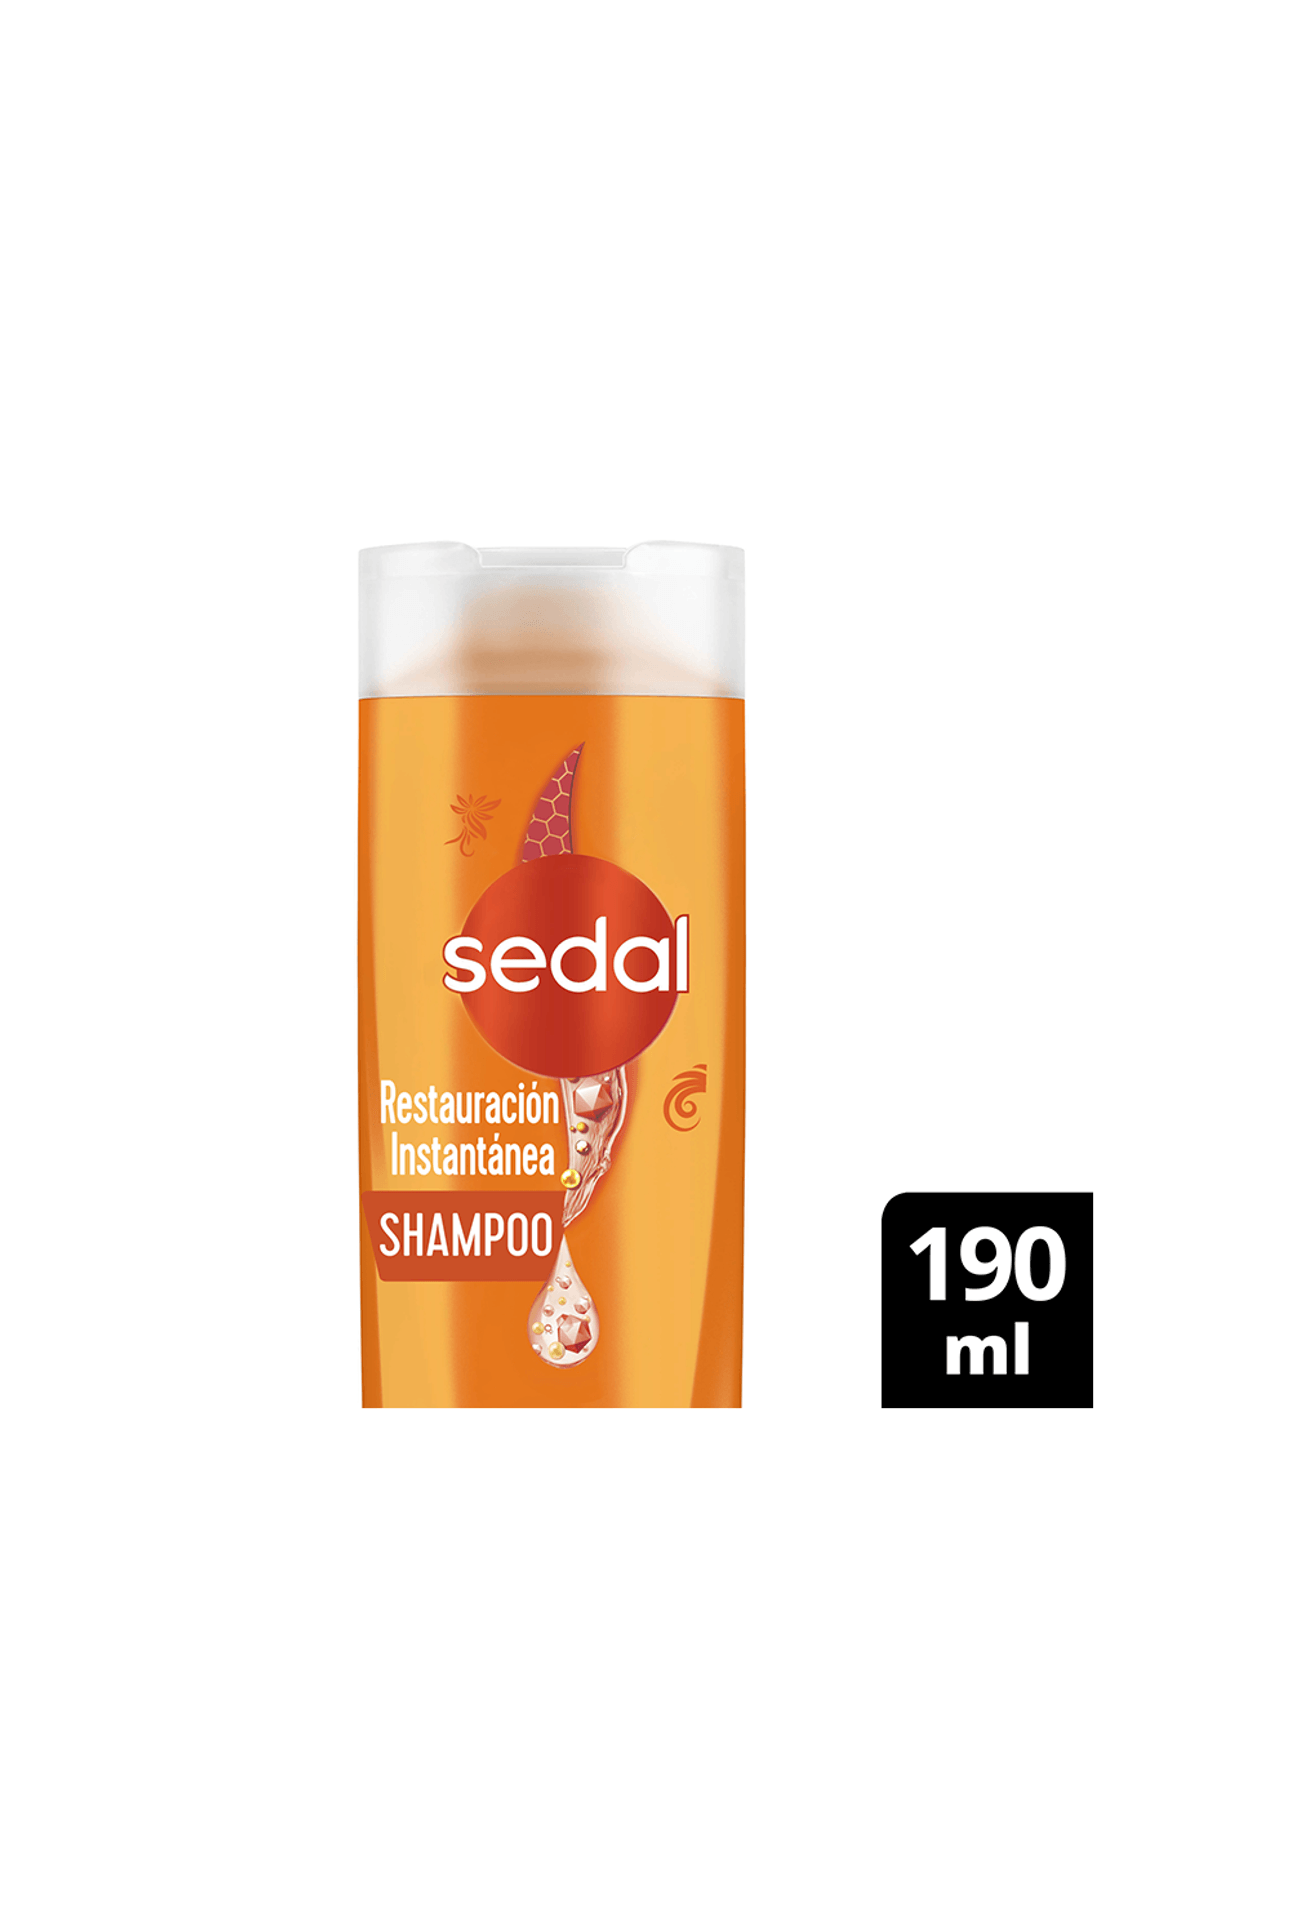 Sedal-Shampoo-Sedal-Restauracion-Instantanea-x-190ml-7791293045689_img1